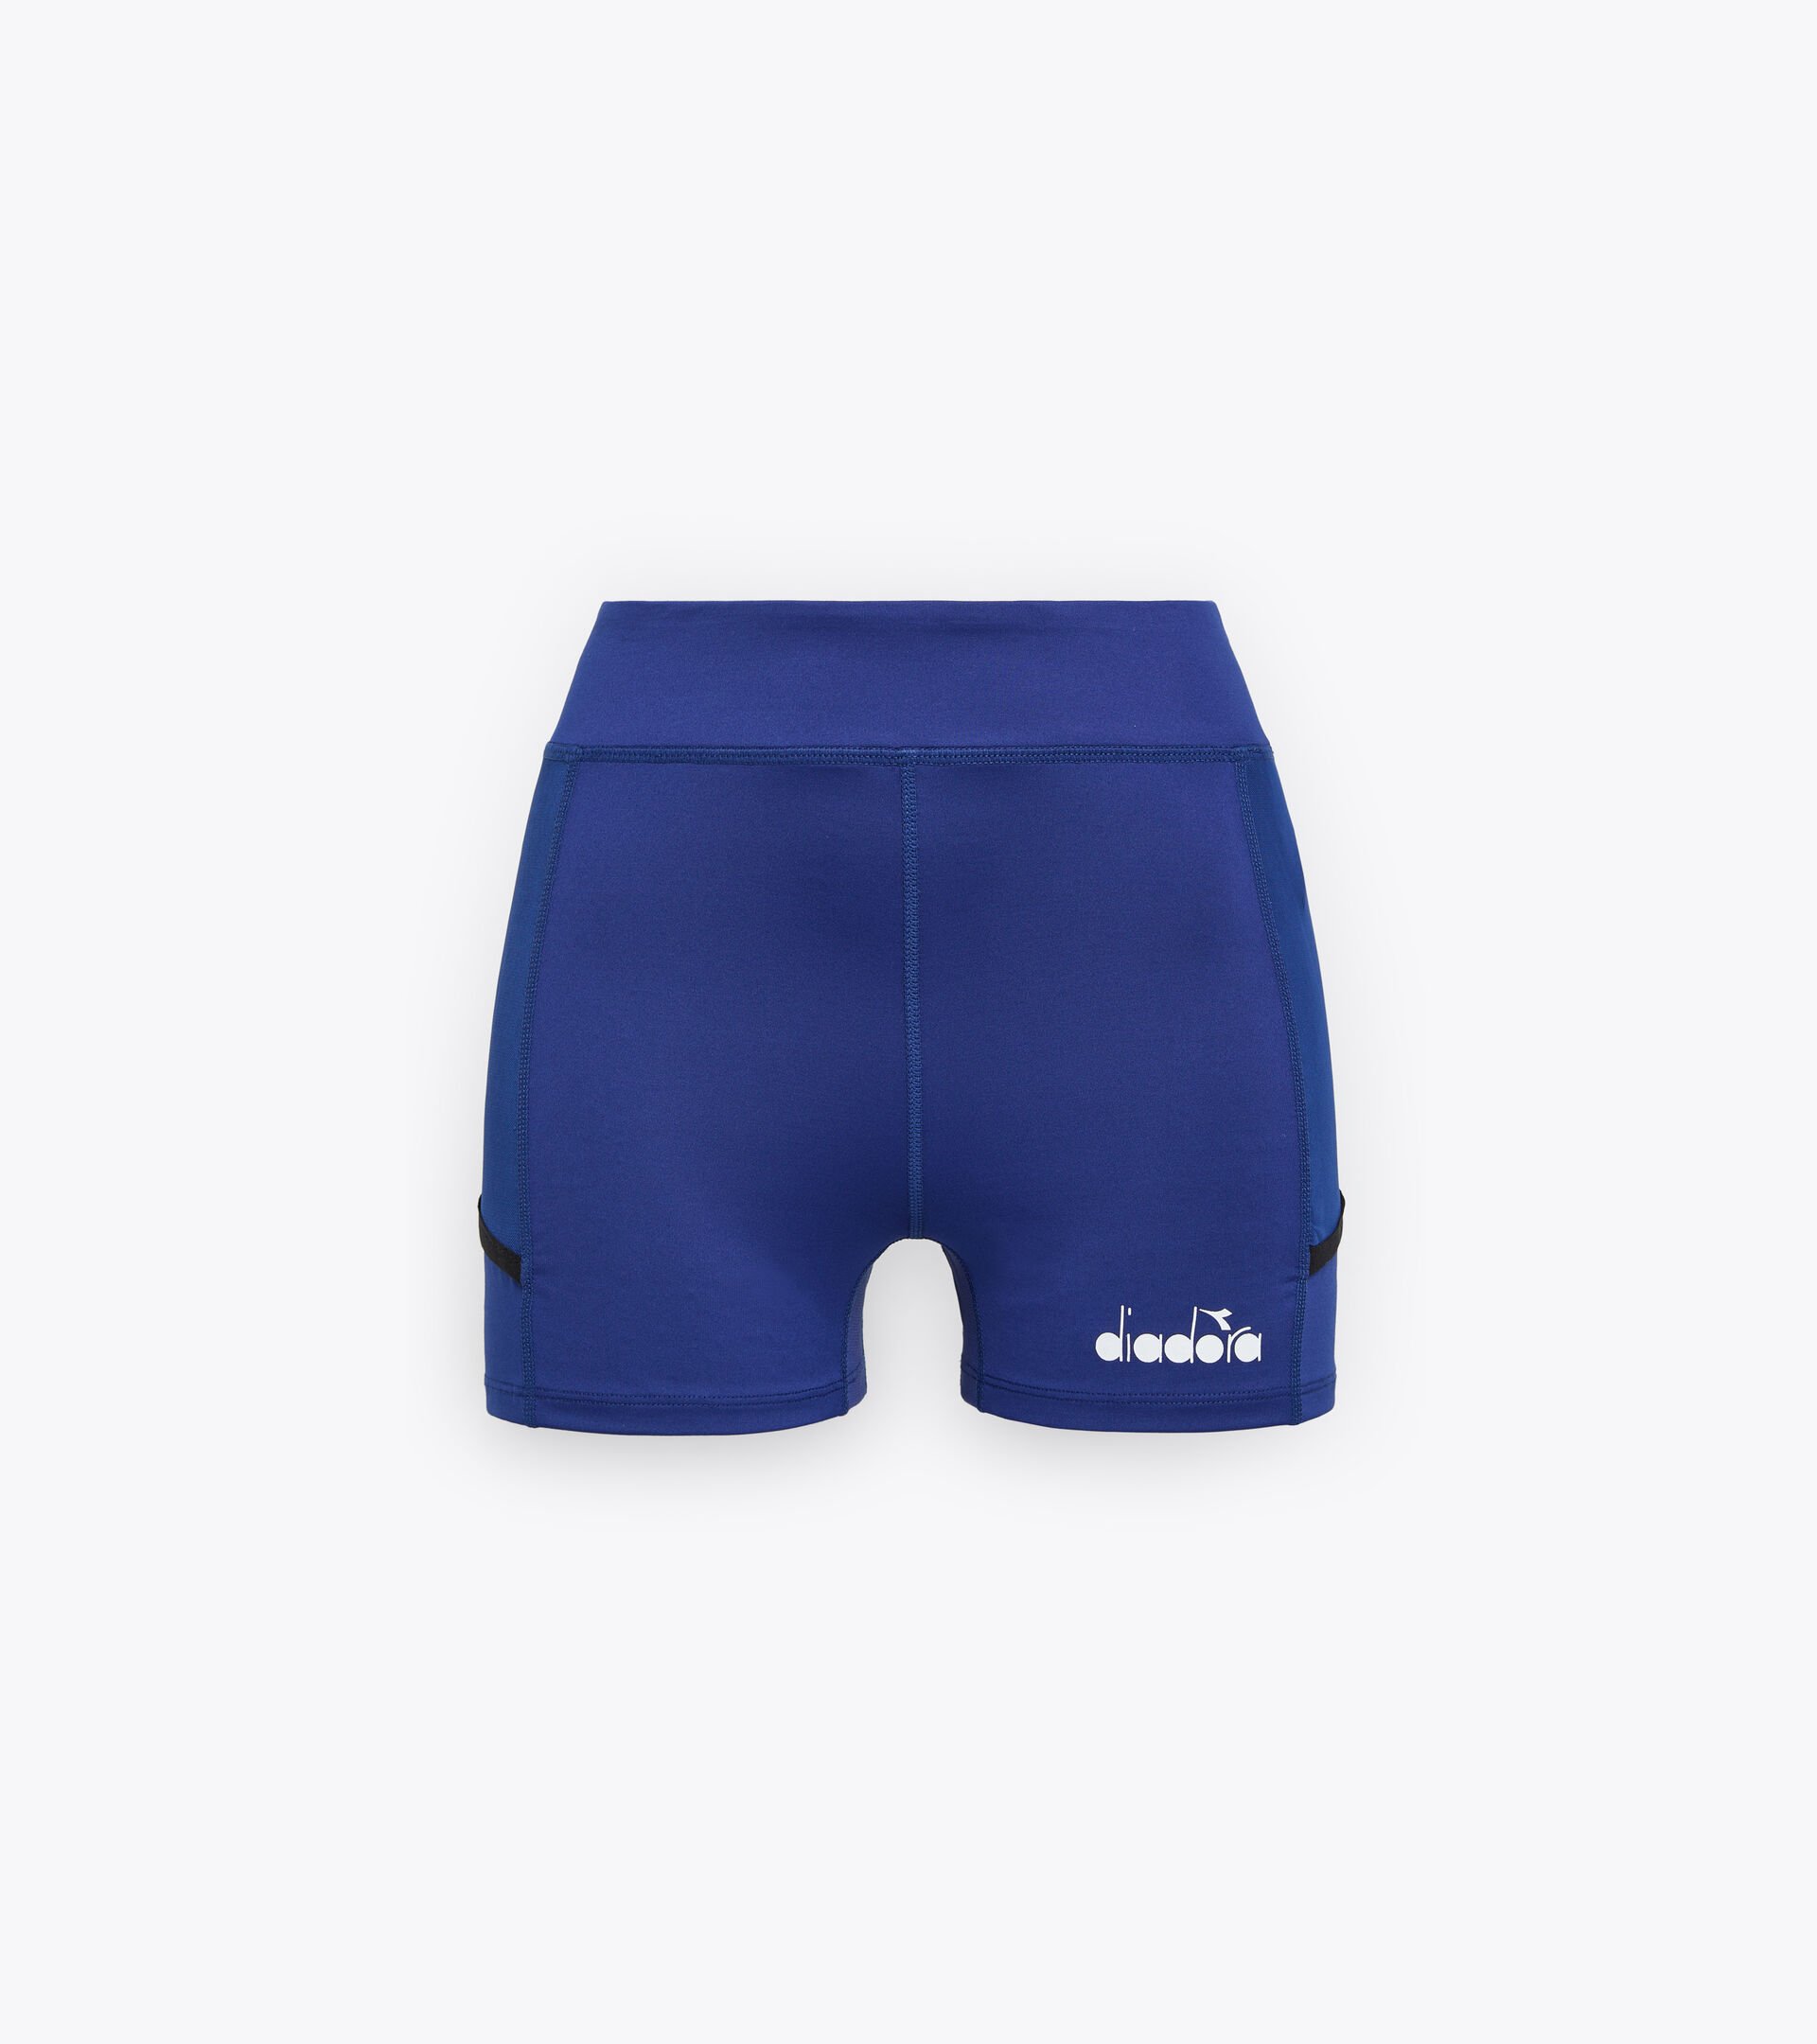 L. SHORT TIGHTS Running shorts - Women - Diadora Online Store US